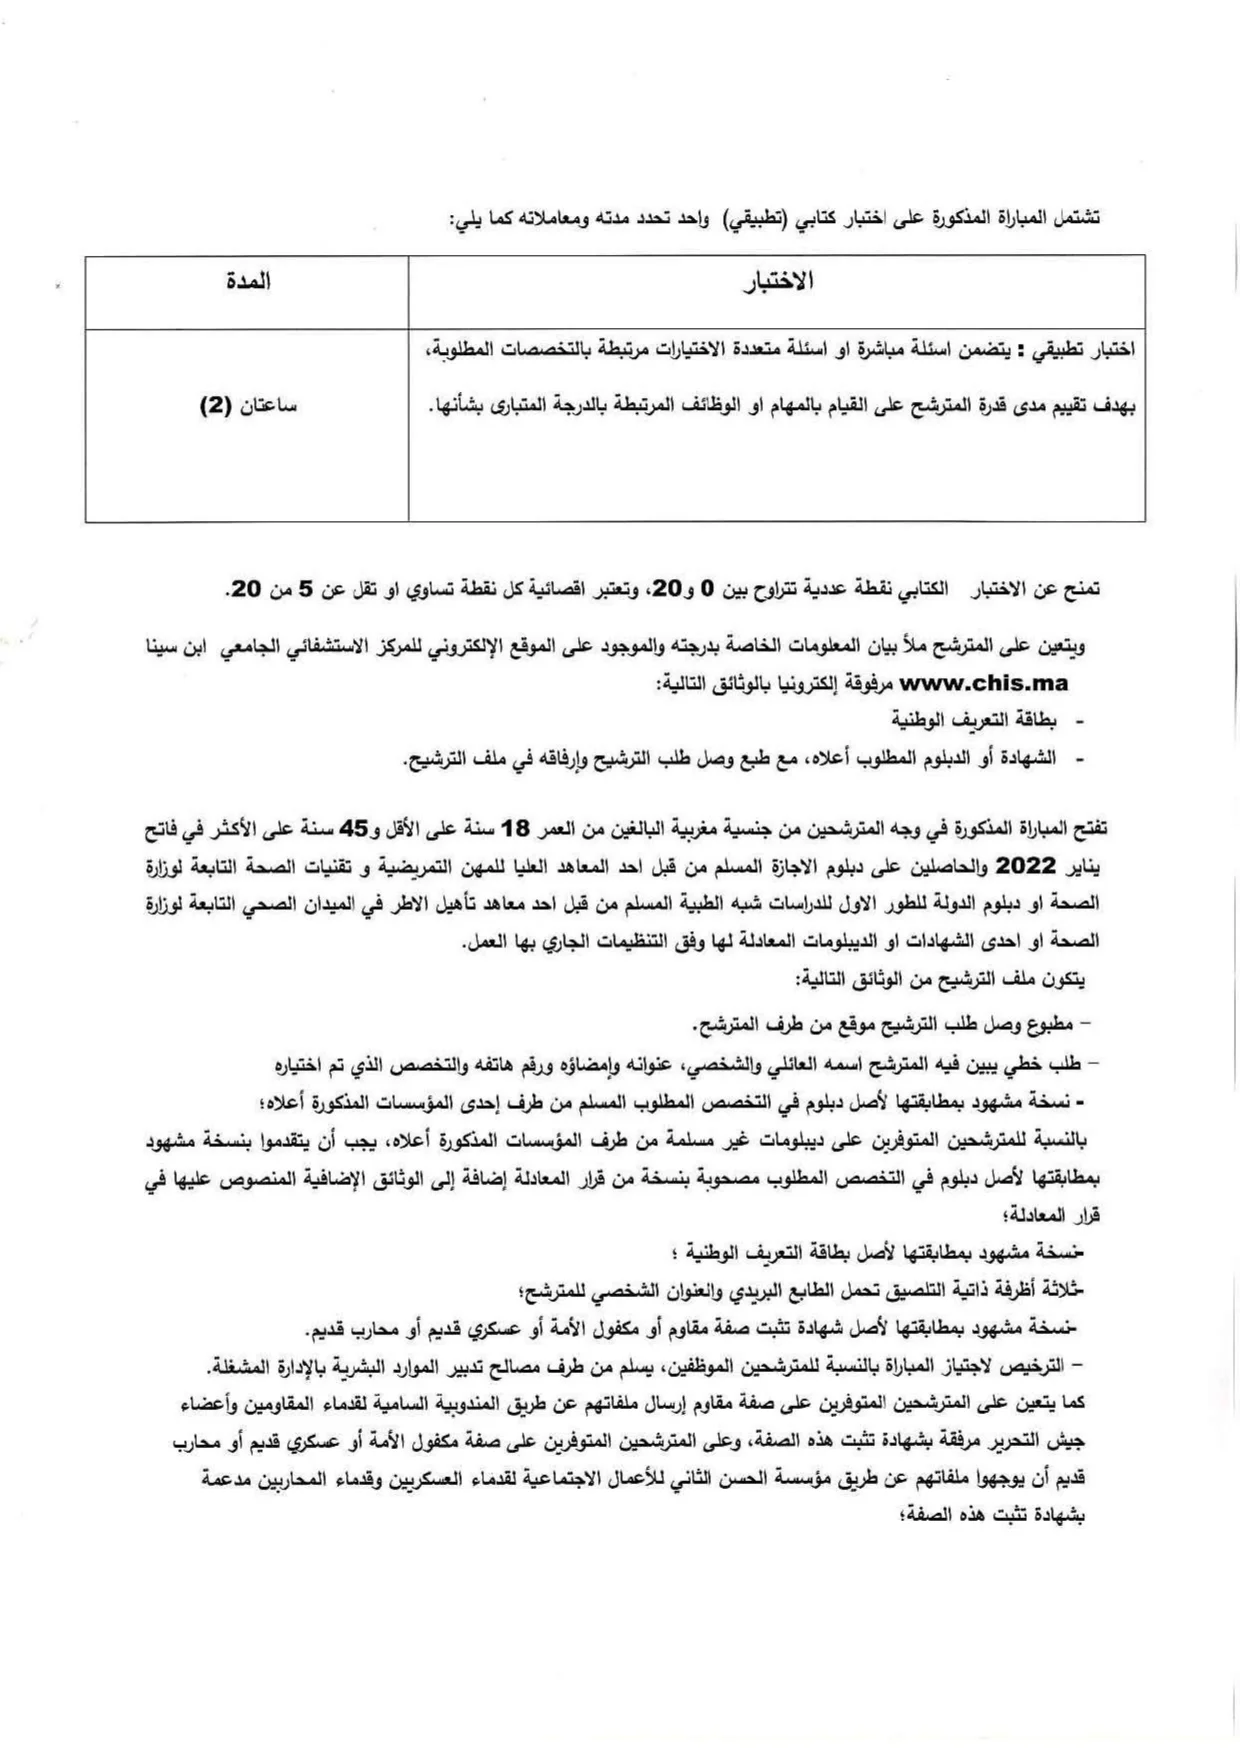 Concours de recrutement CHU Ibn Sina 2022 (267 postes)